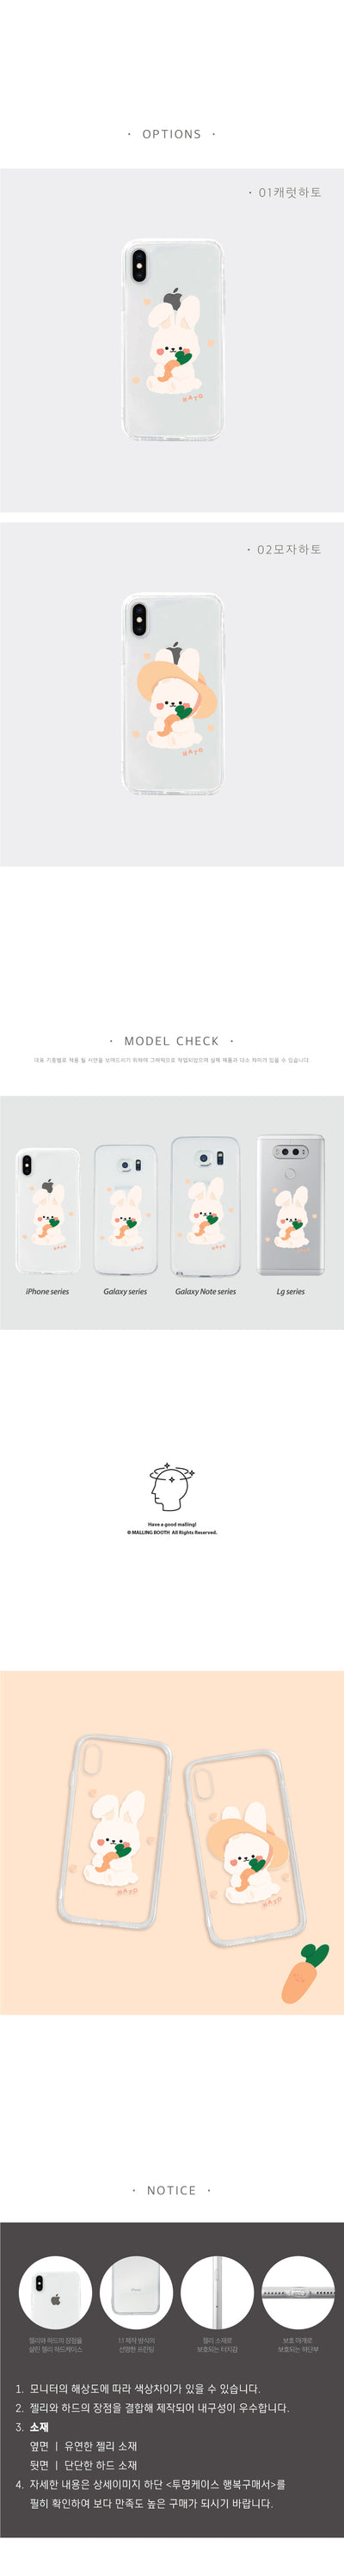 HATO and Carrot Smartphone Case